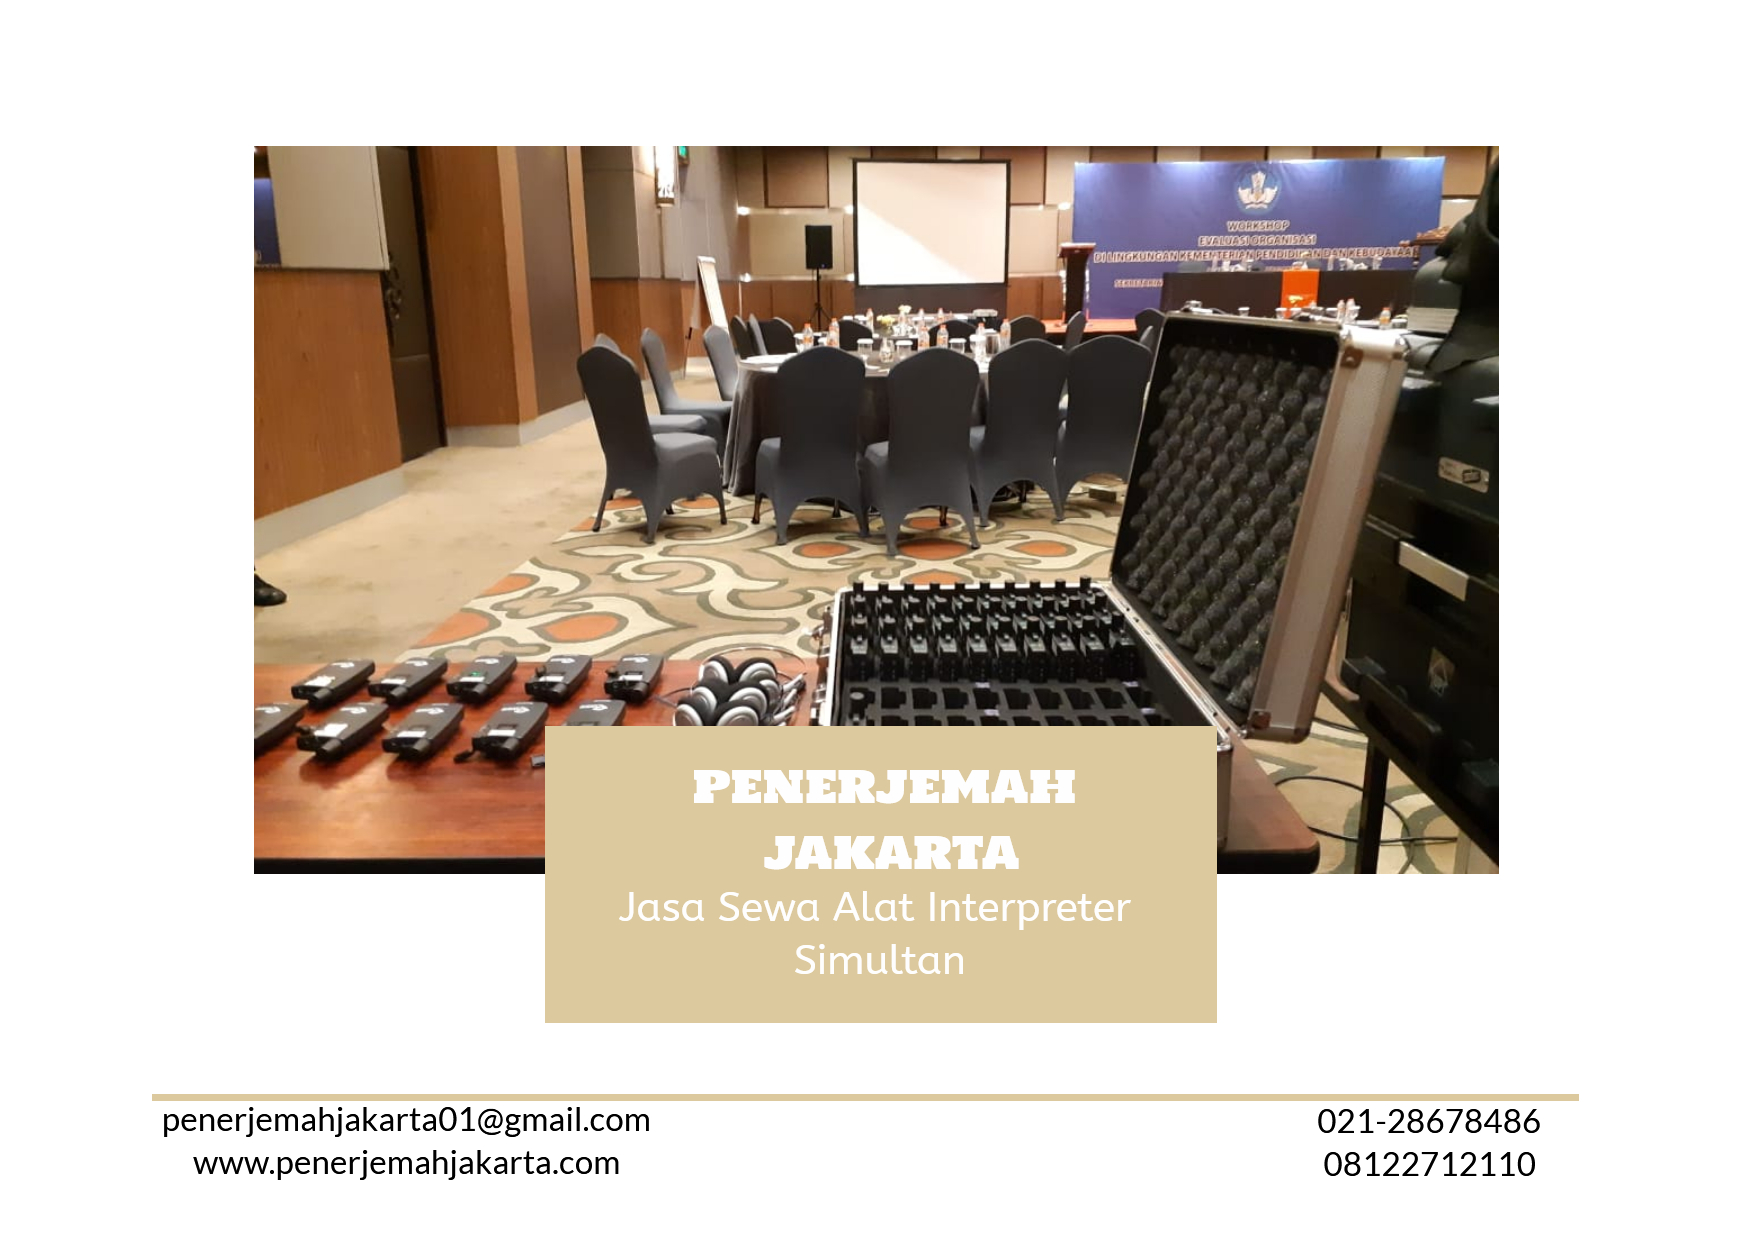 Sewa Alat Interpreter Jakarta